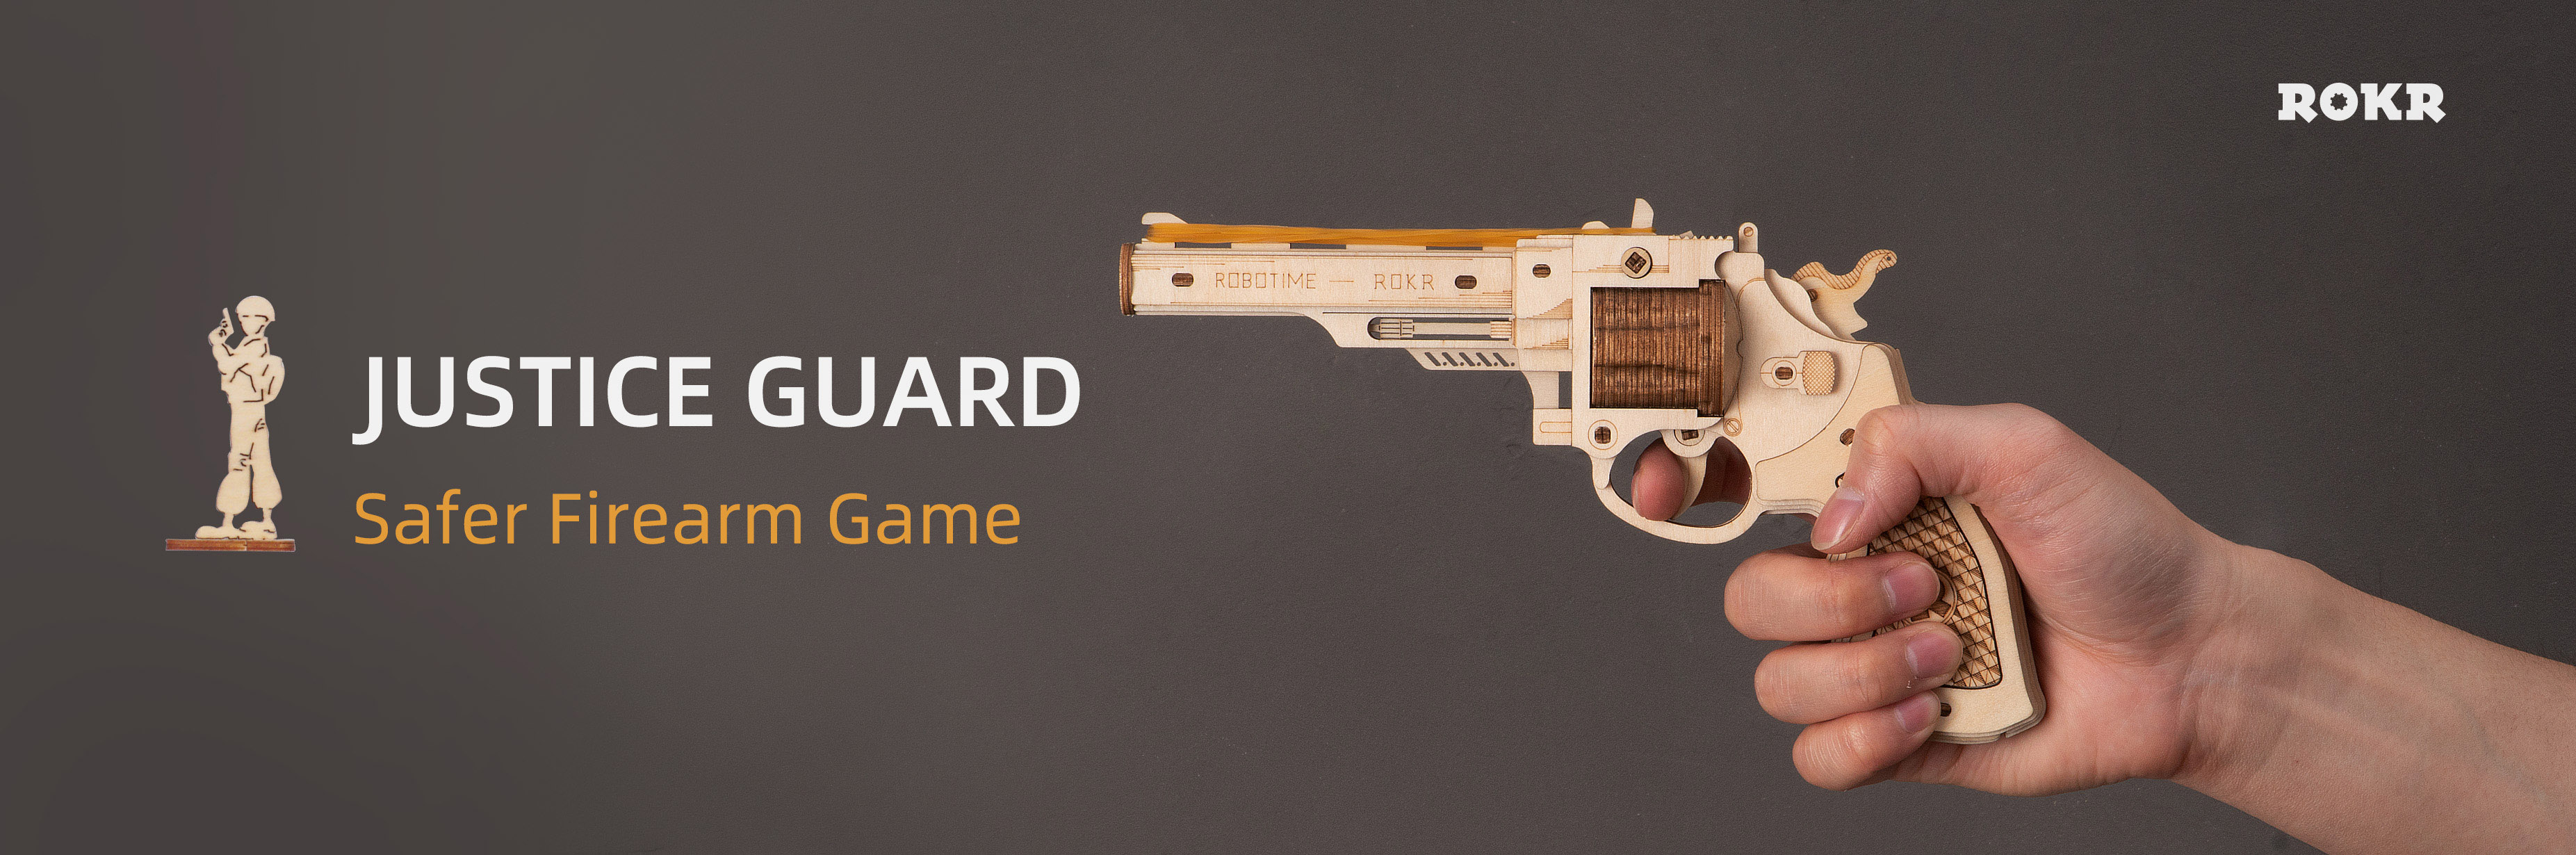 new arrival of ROKR gun models-justice guard3